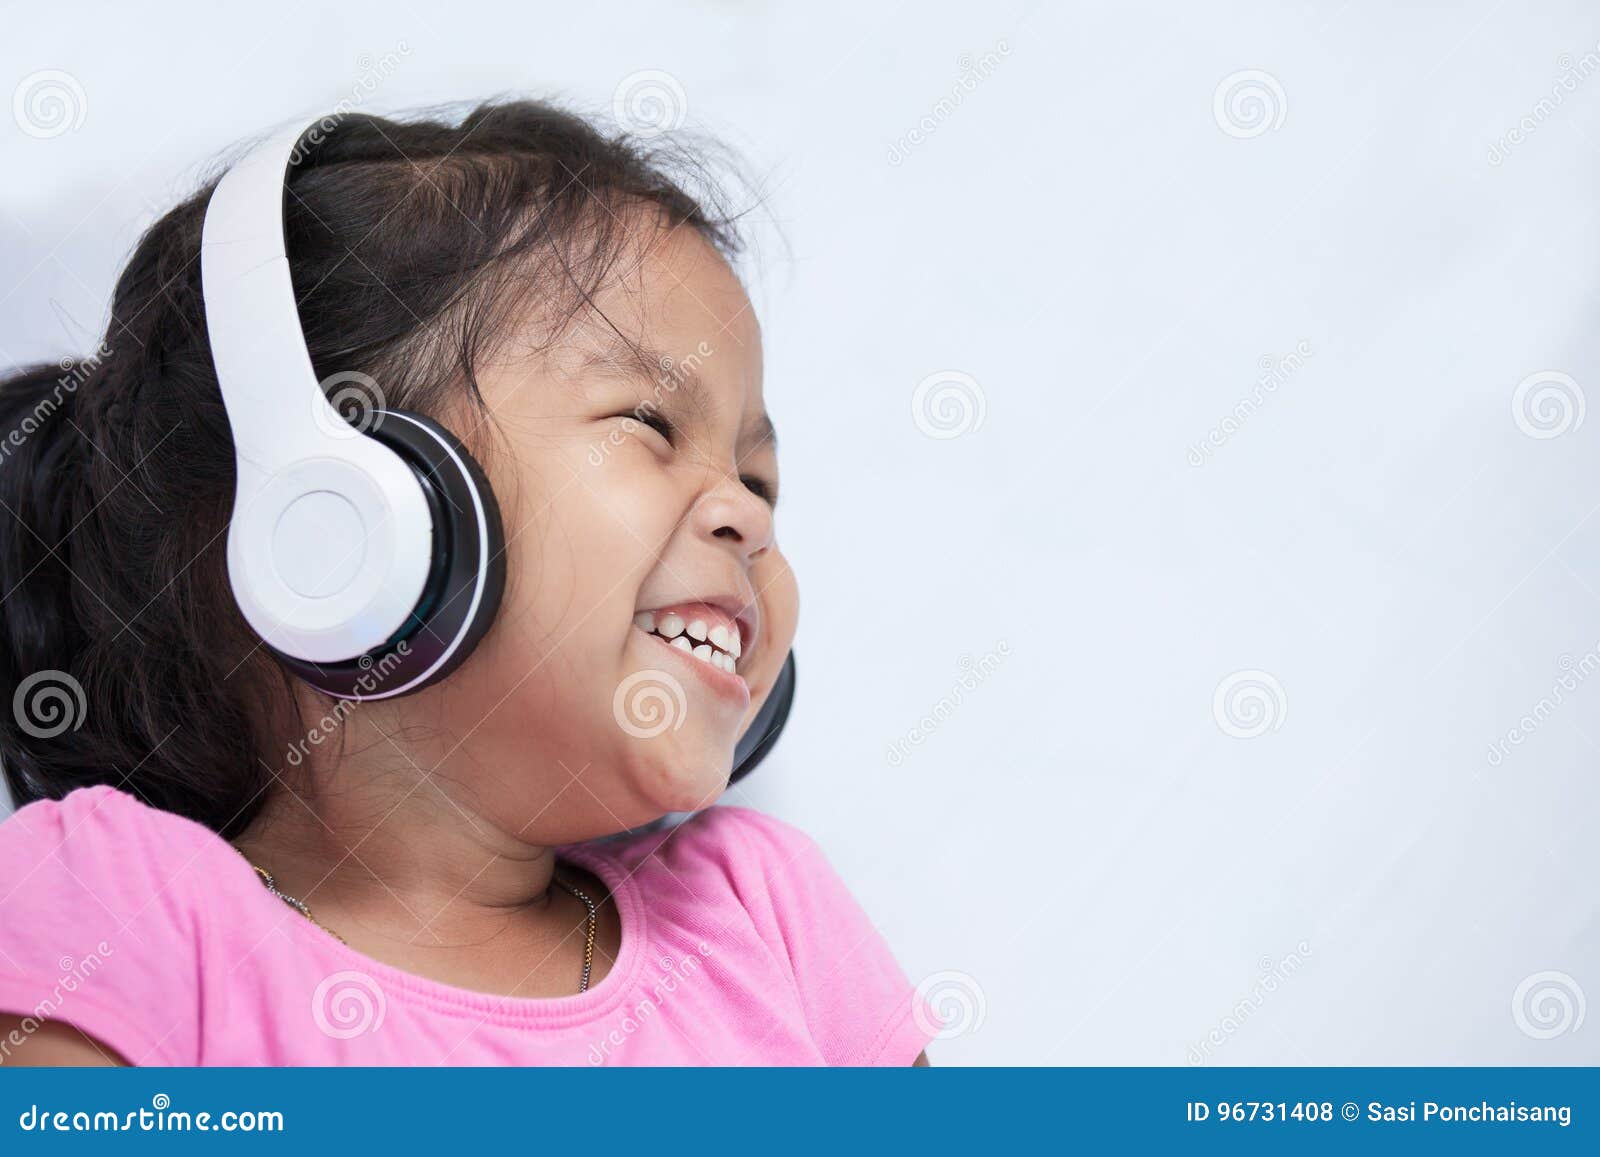 Cute Asian Child Girl in Headphones Listening the Music Stock Photo ...